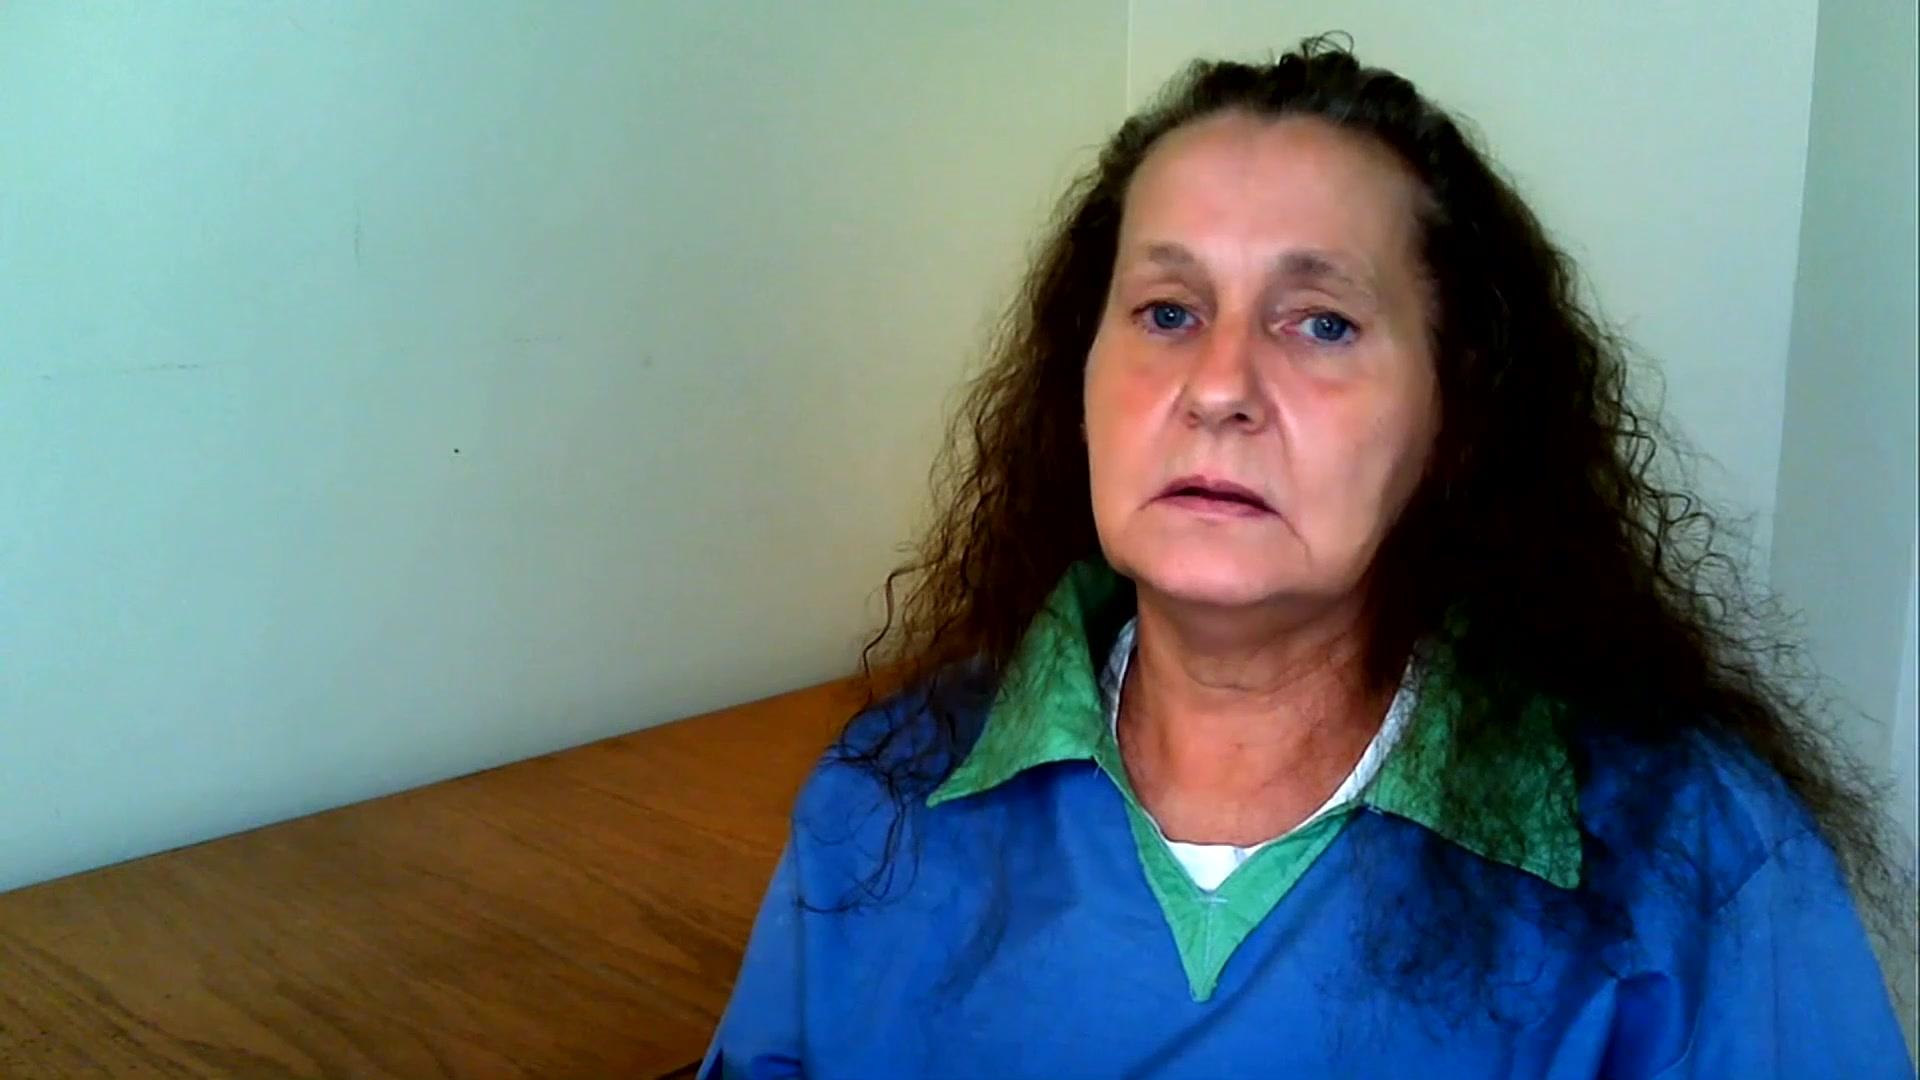 Teresa Kotomiski Says She Was “Wrongfully Convicted”